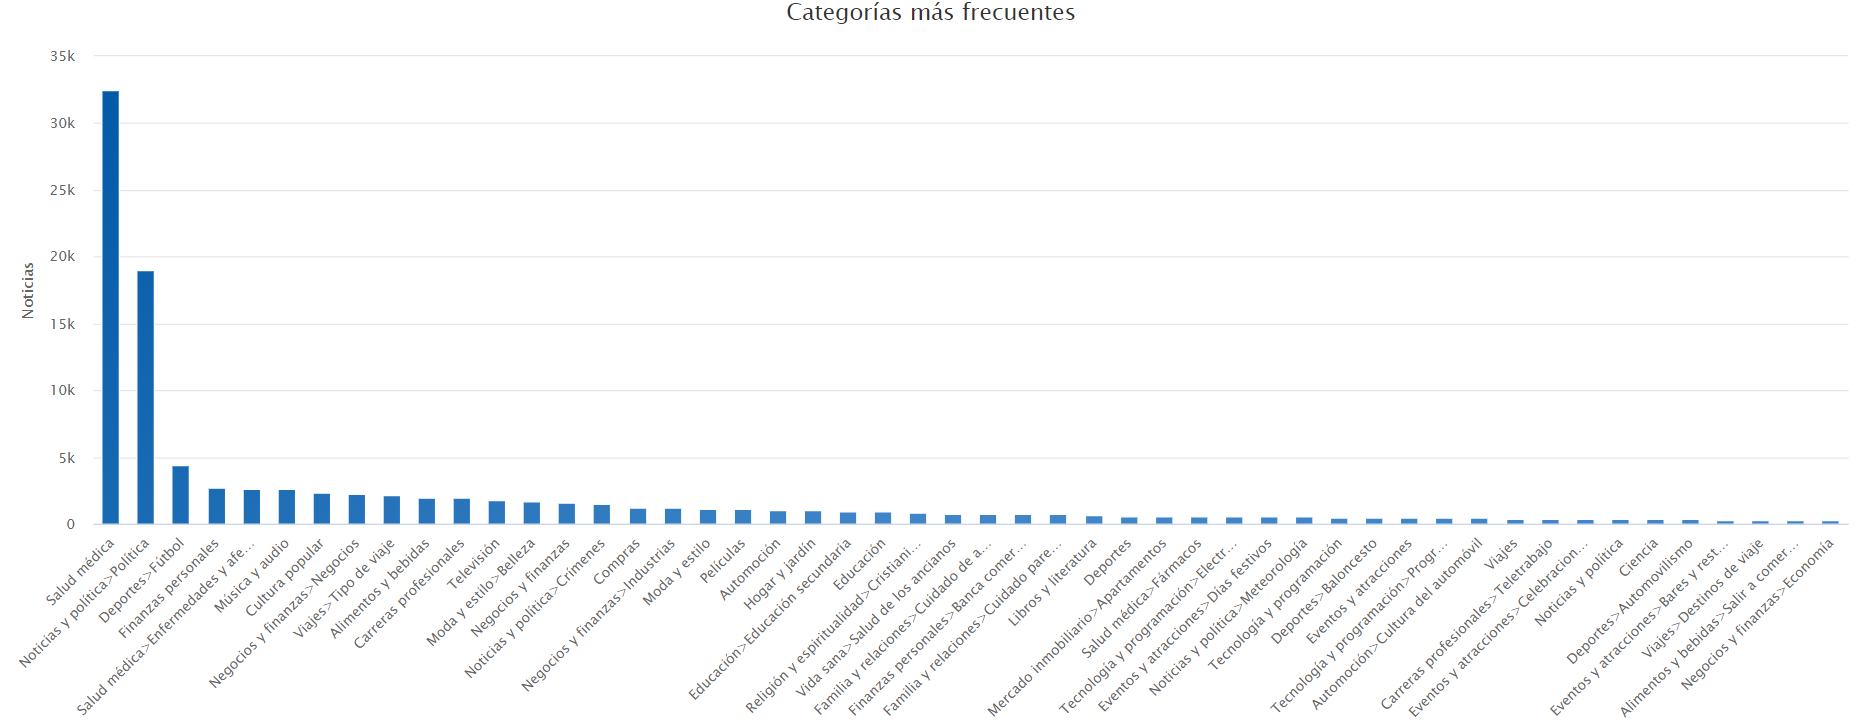 Distribution of IAB categories